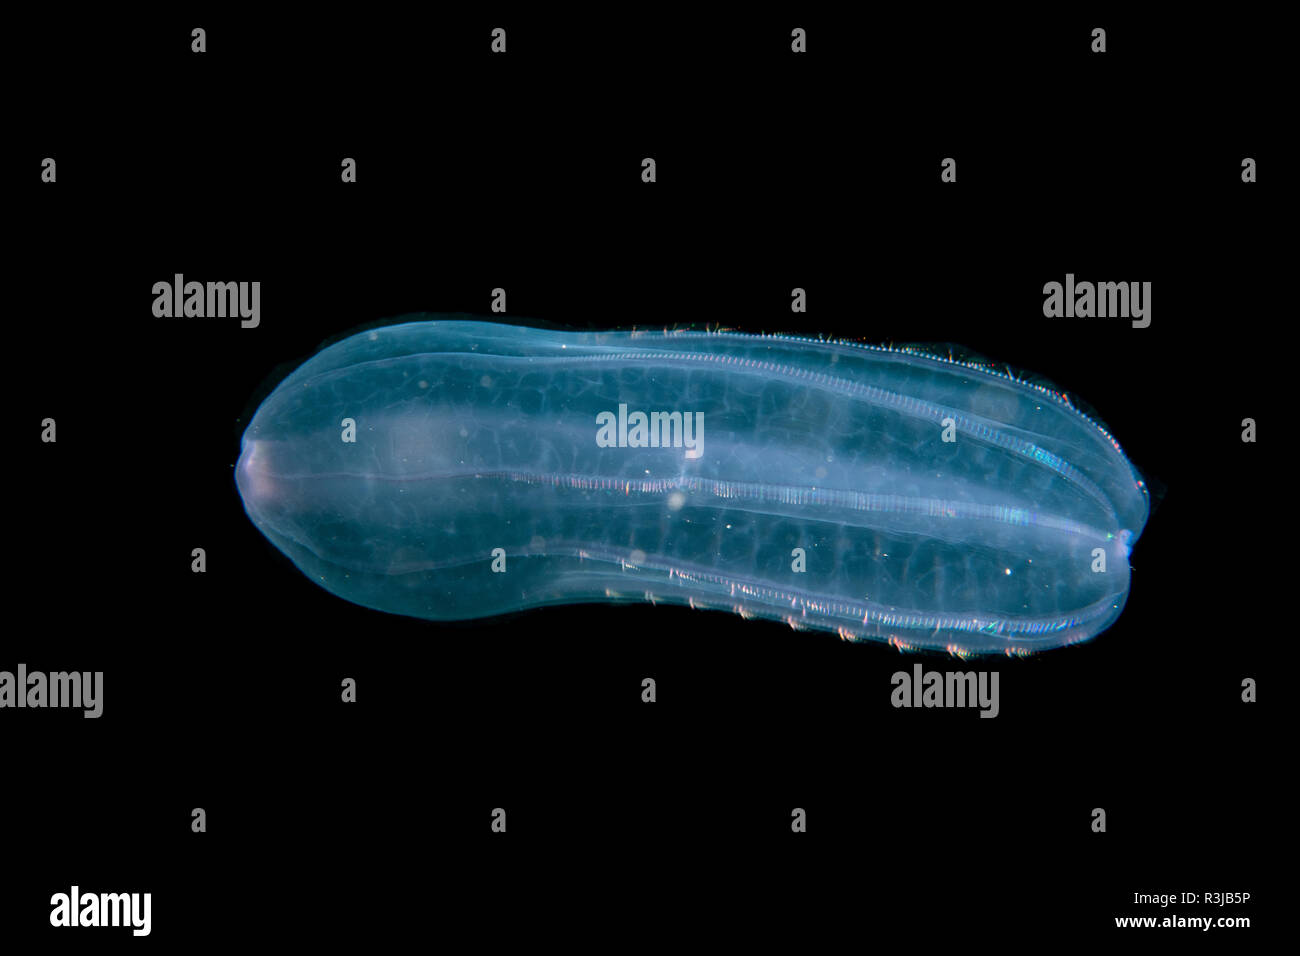 Comb jellyfish Beroe cucumis Stock Photo